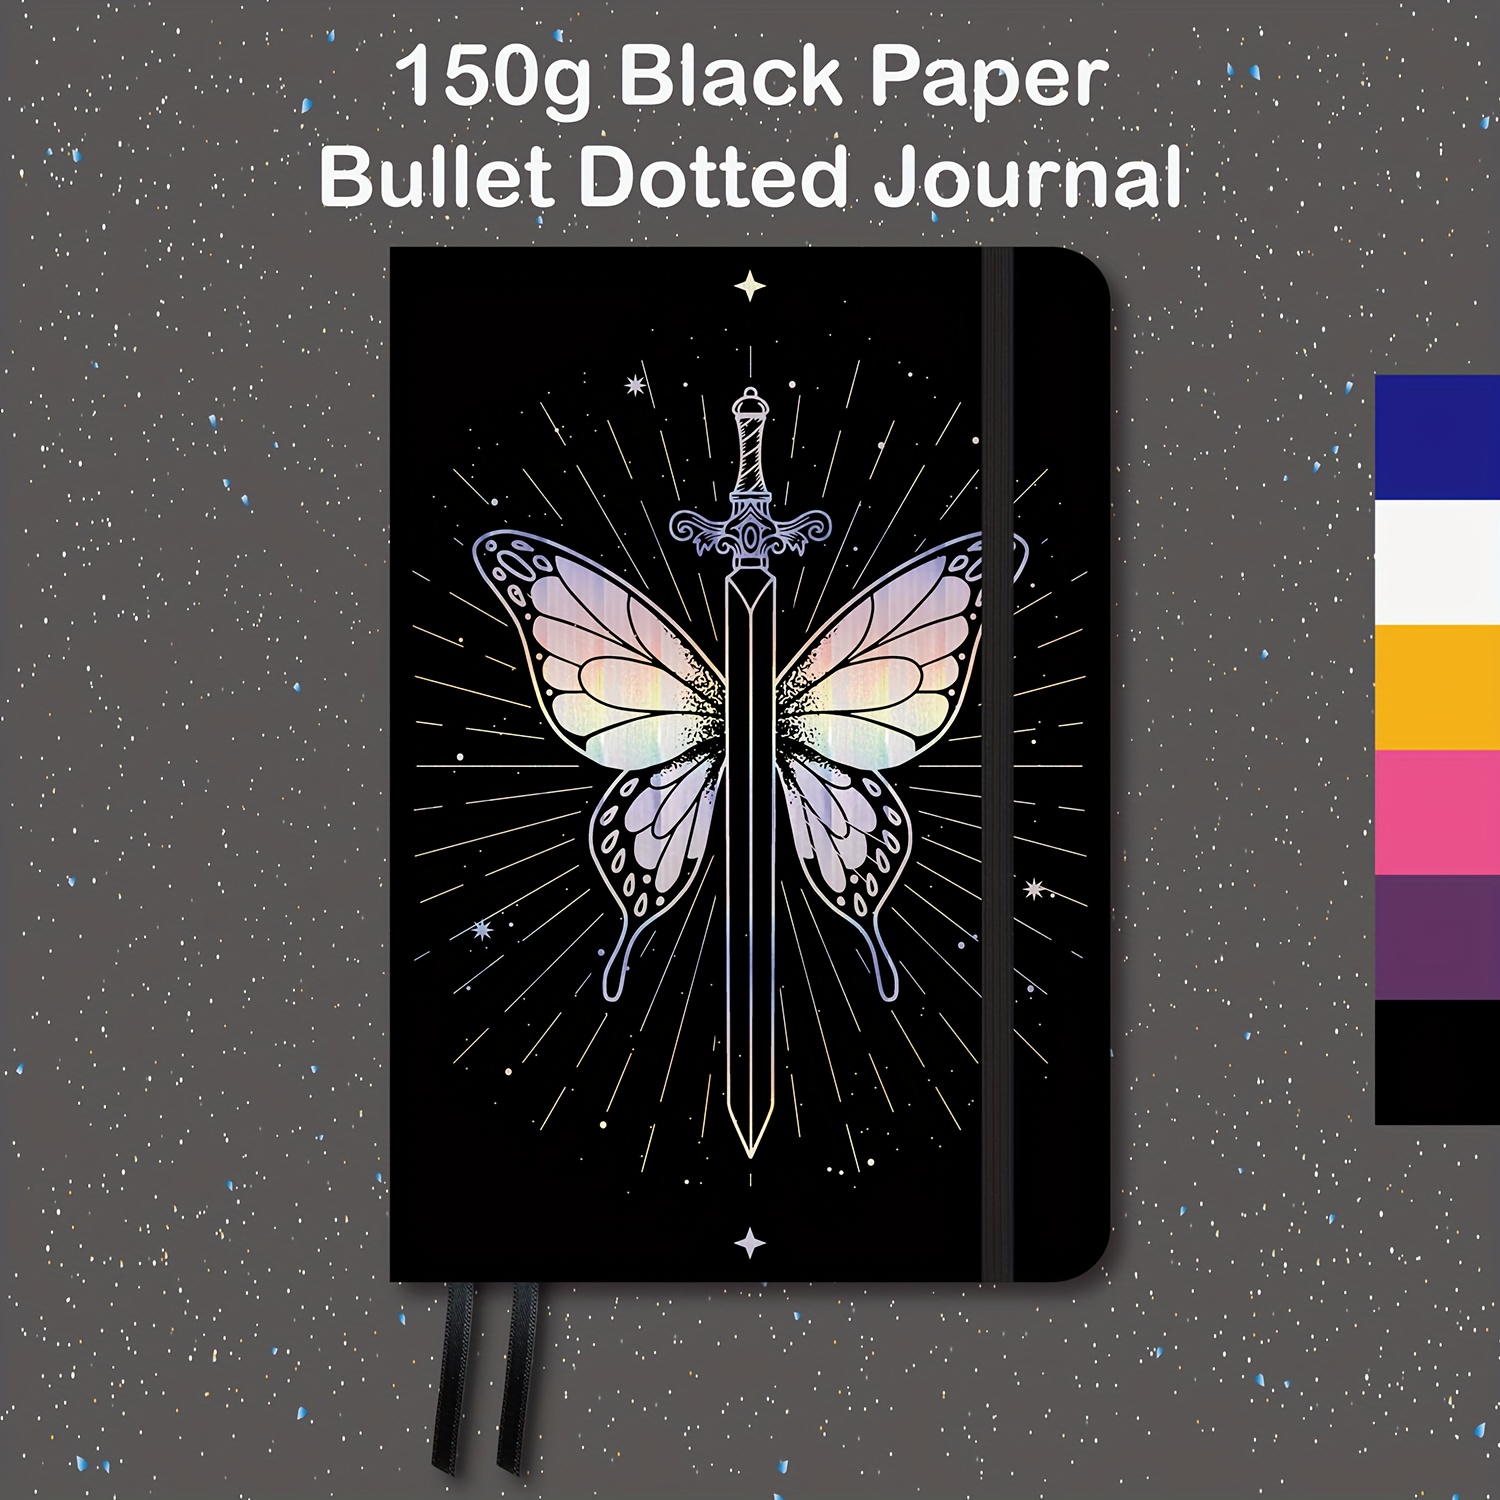  Black Paper Journal